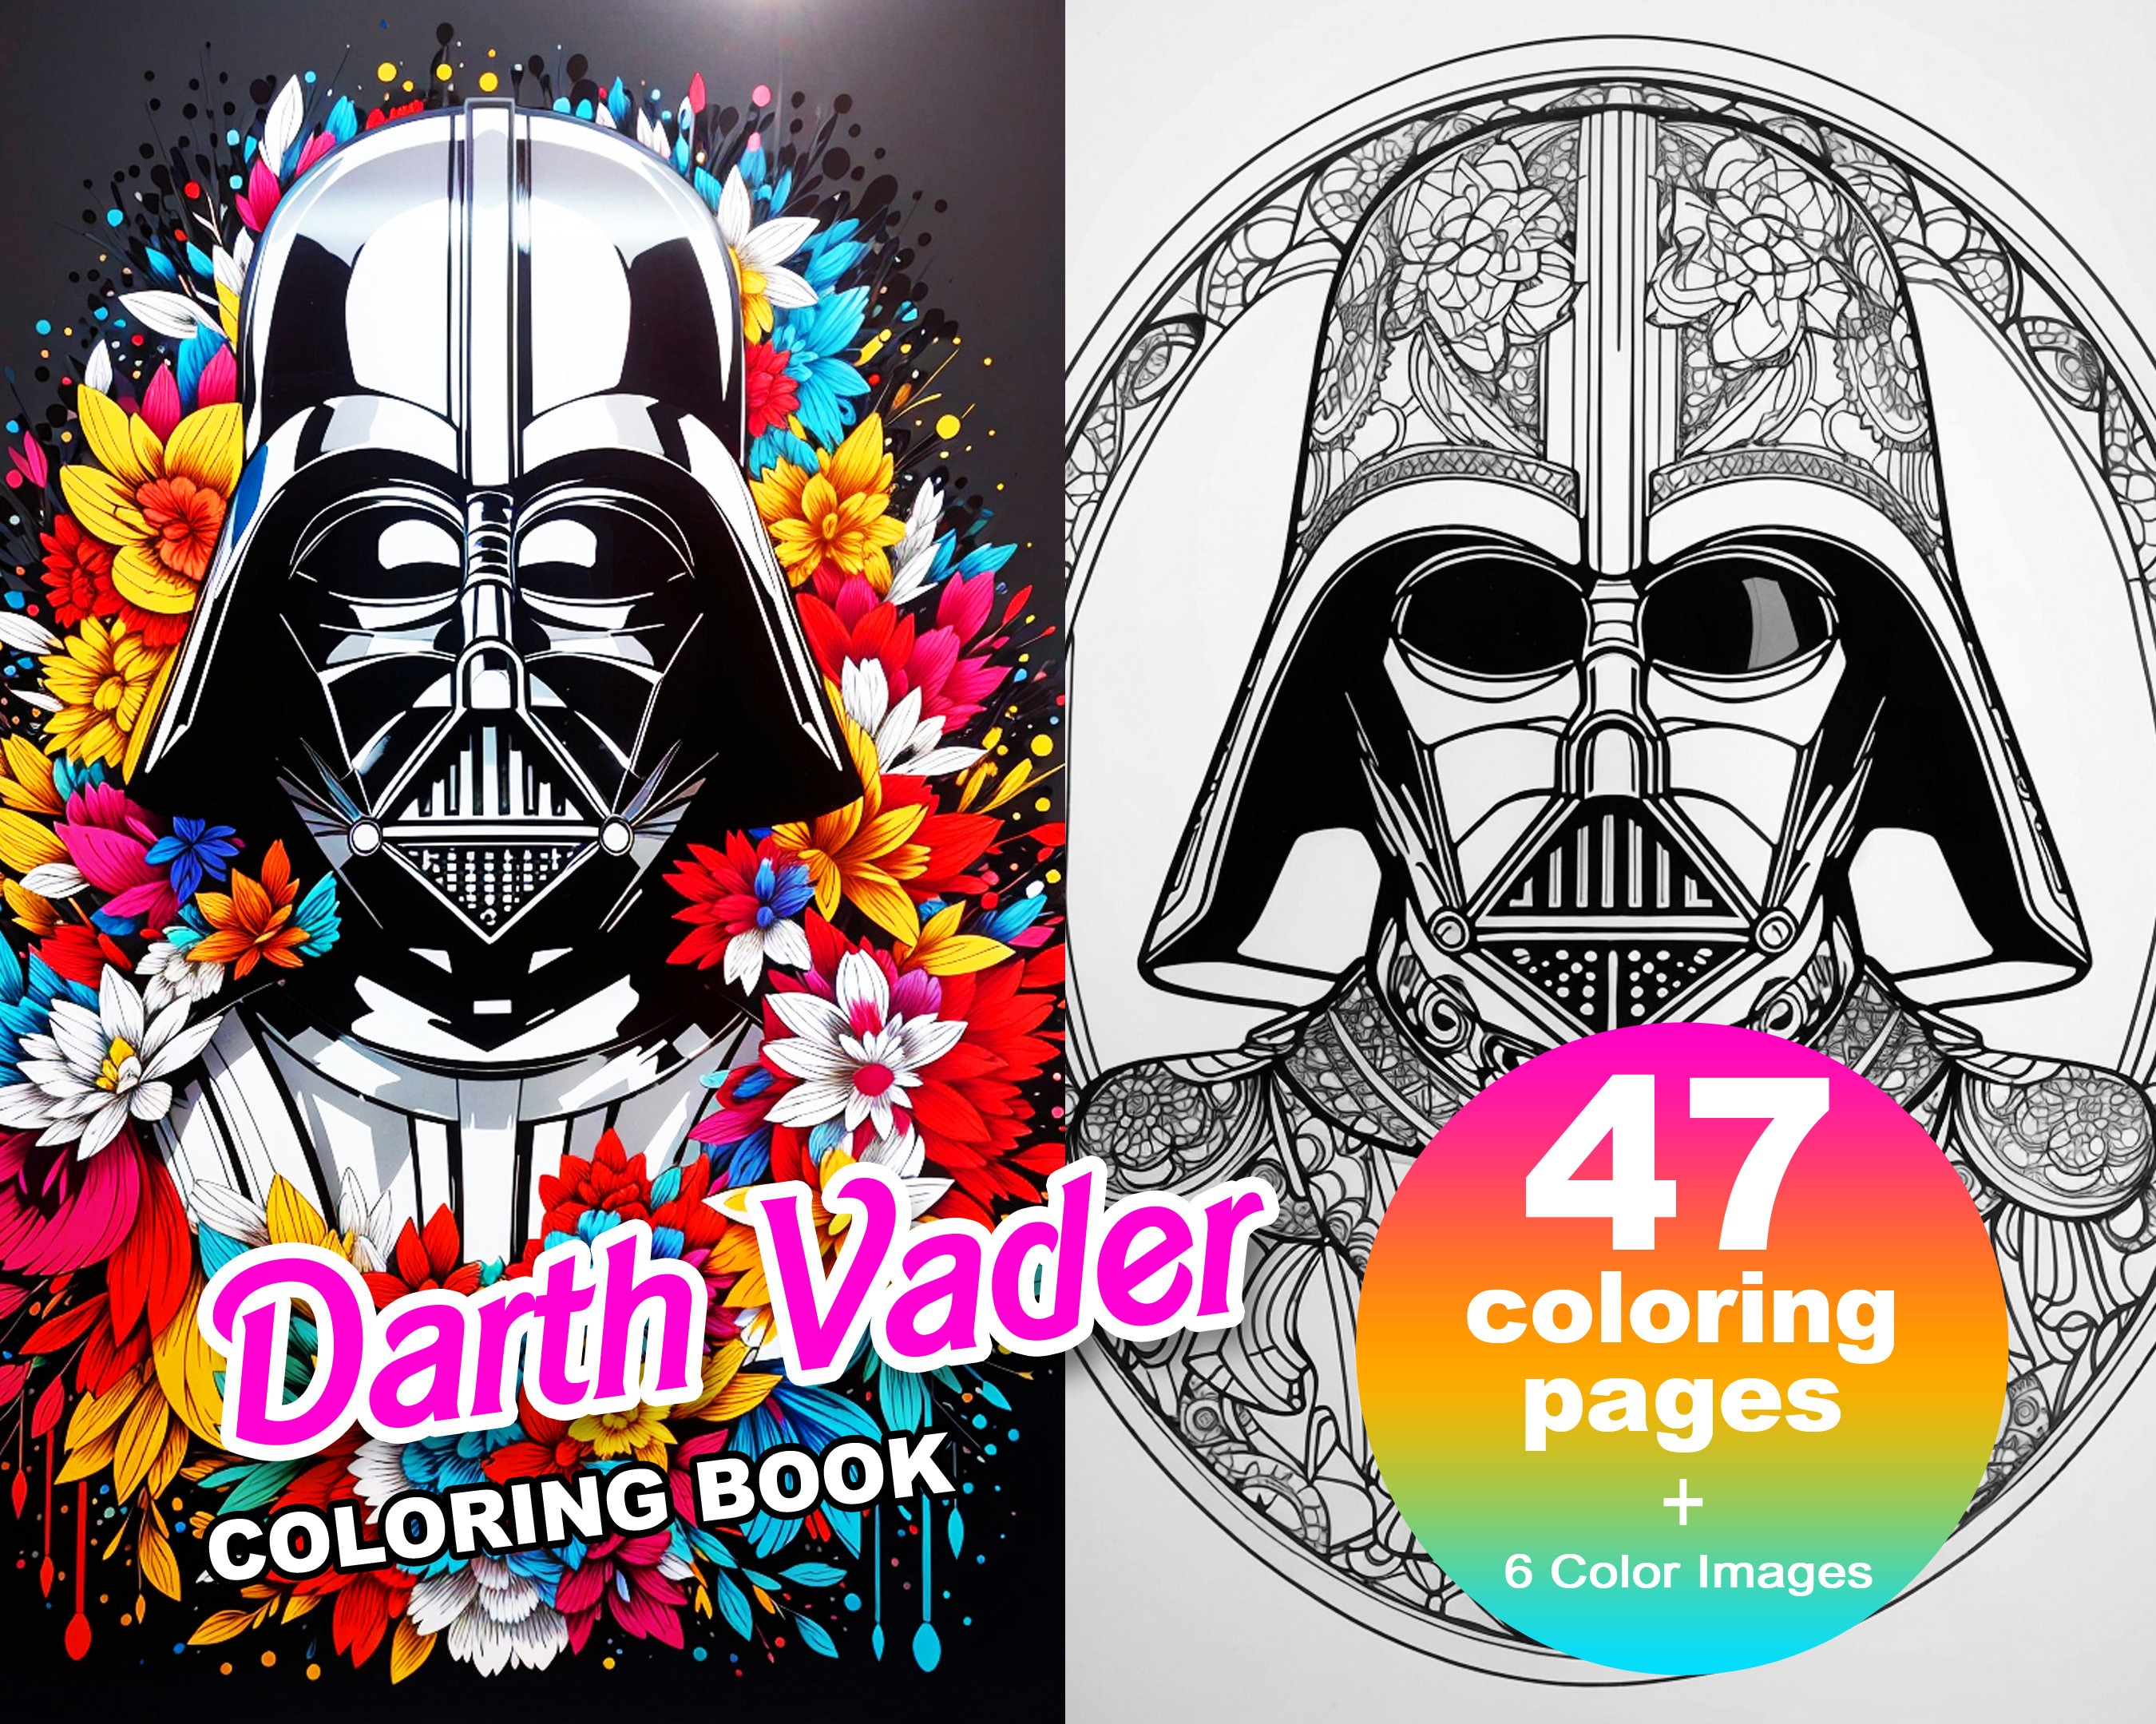 Darth vader coloring page adults kids instant download animal coloring gift printable art pdf mr visual arts